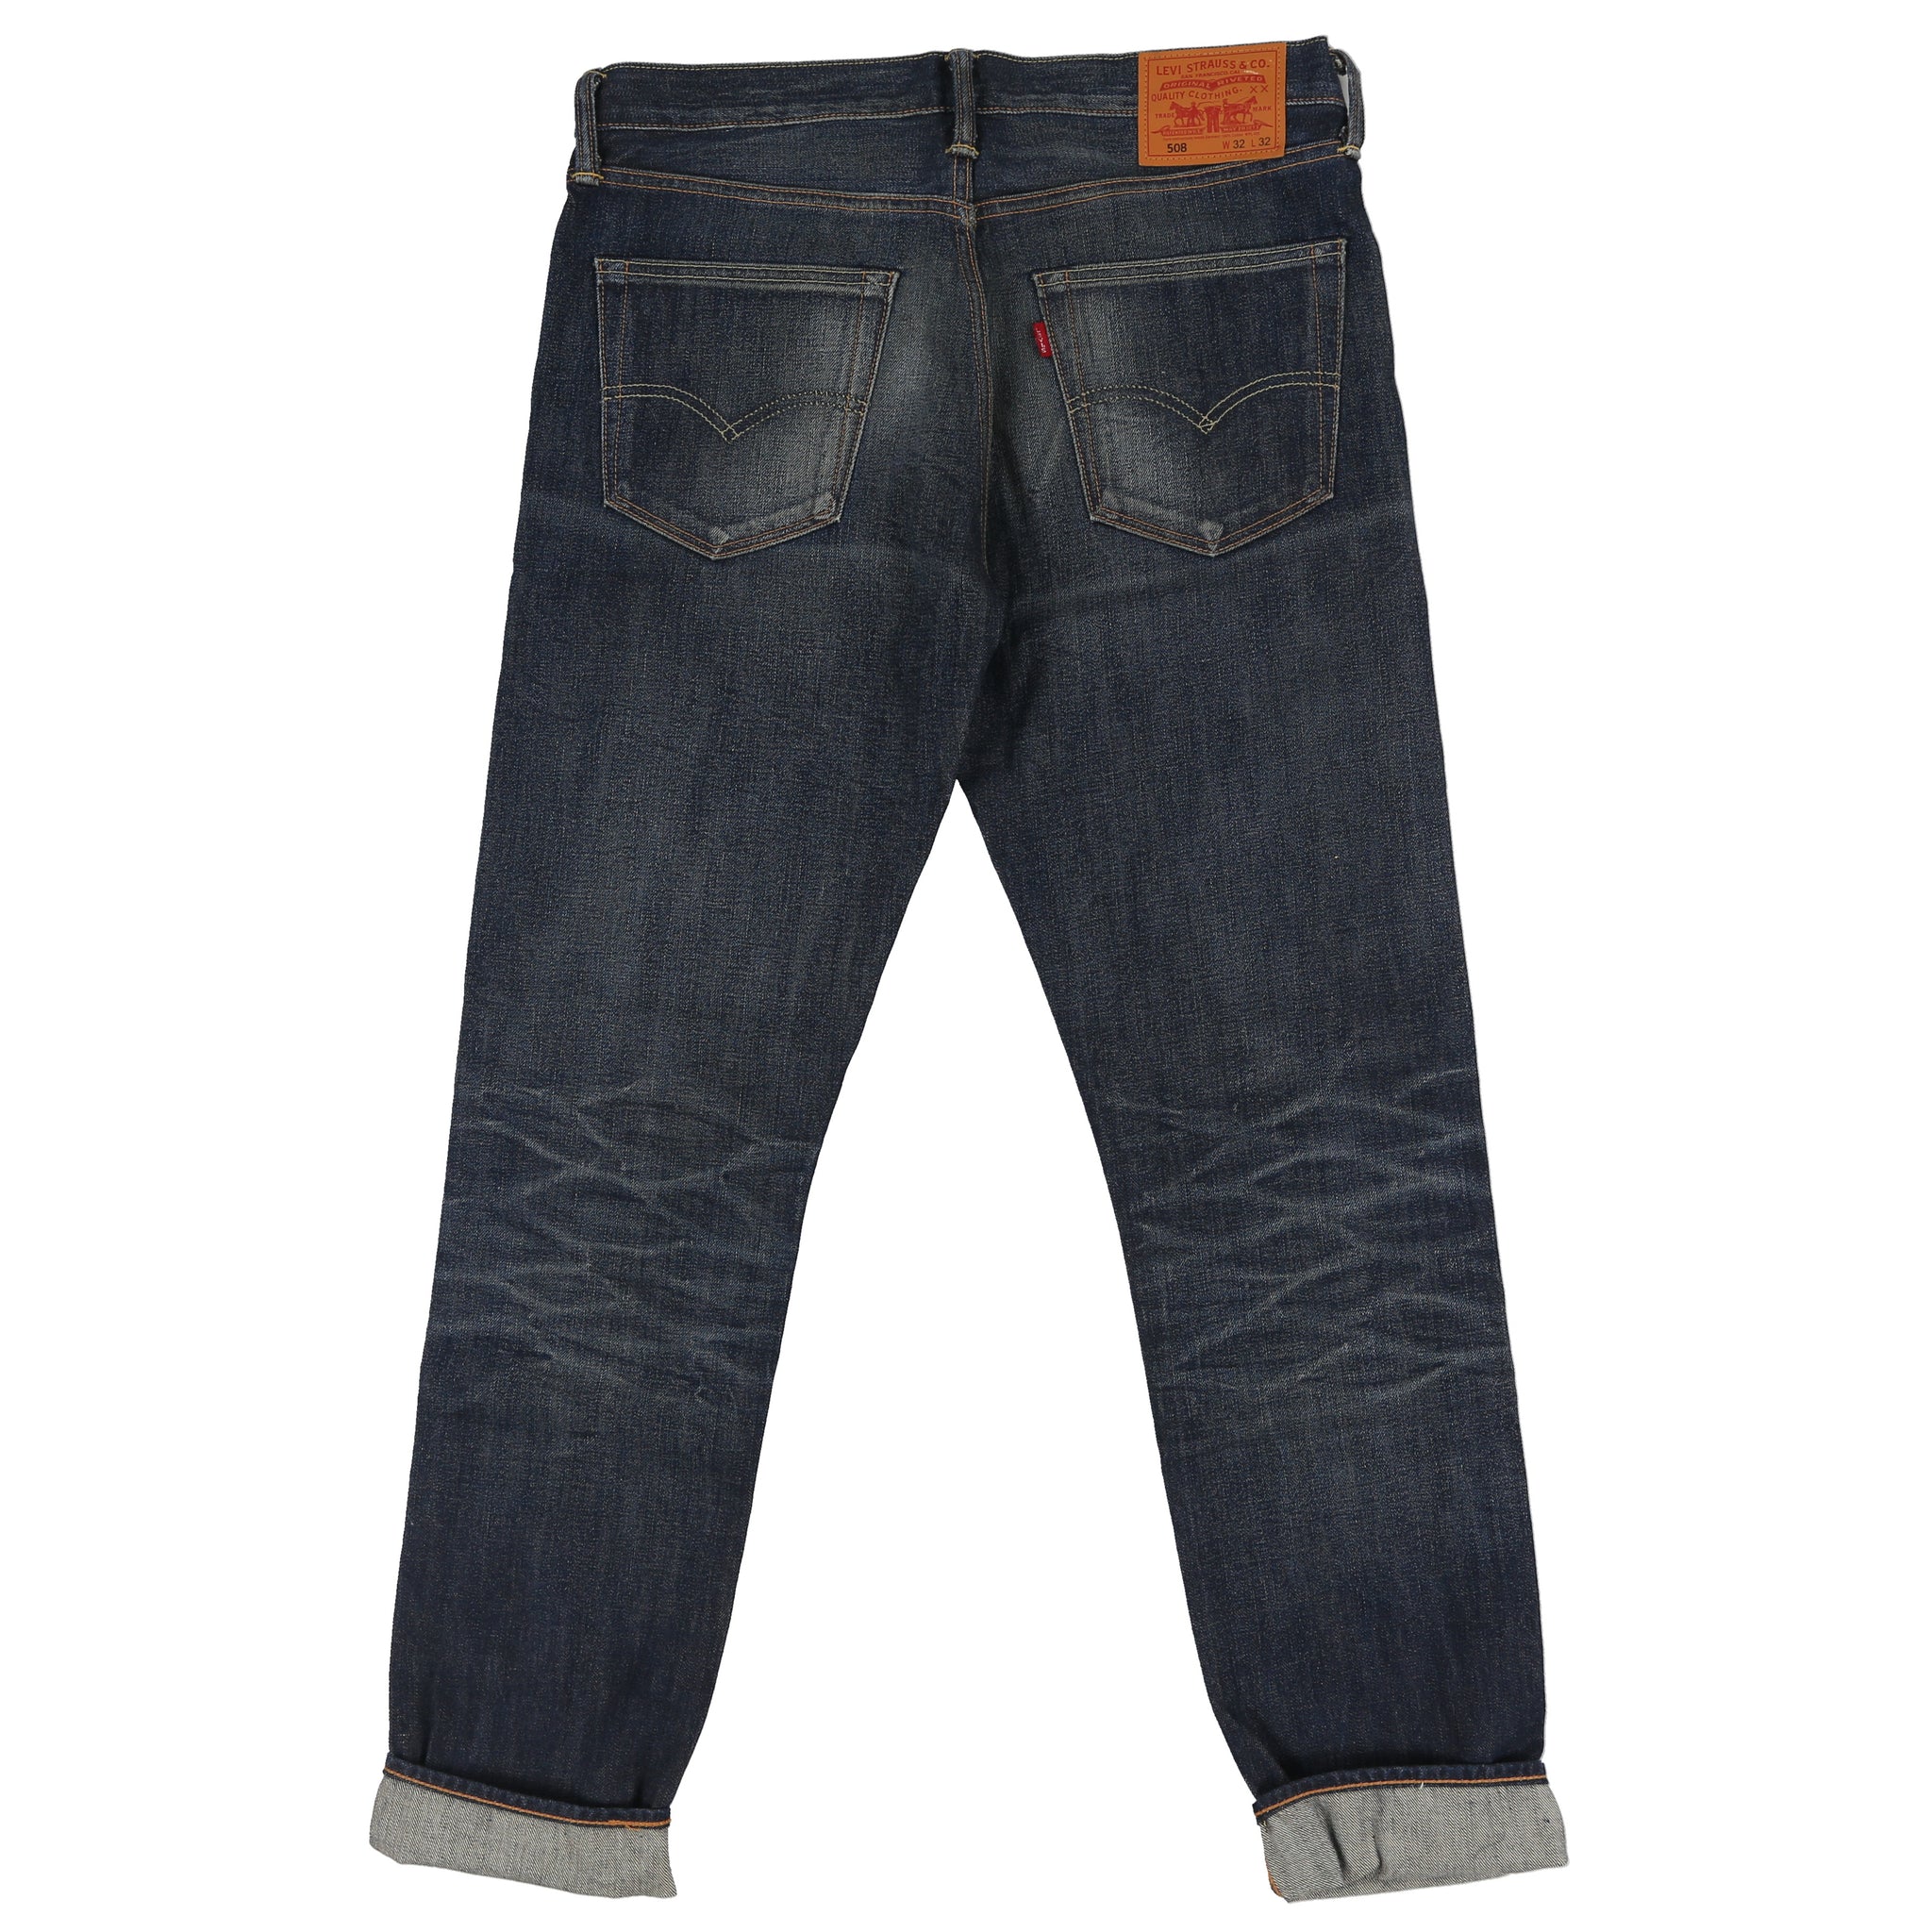 New Levis 508 Distressed Selvedge Denim Jeans